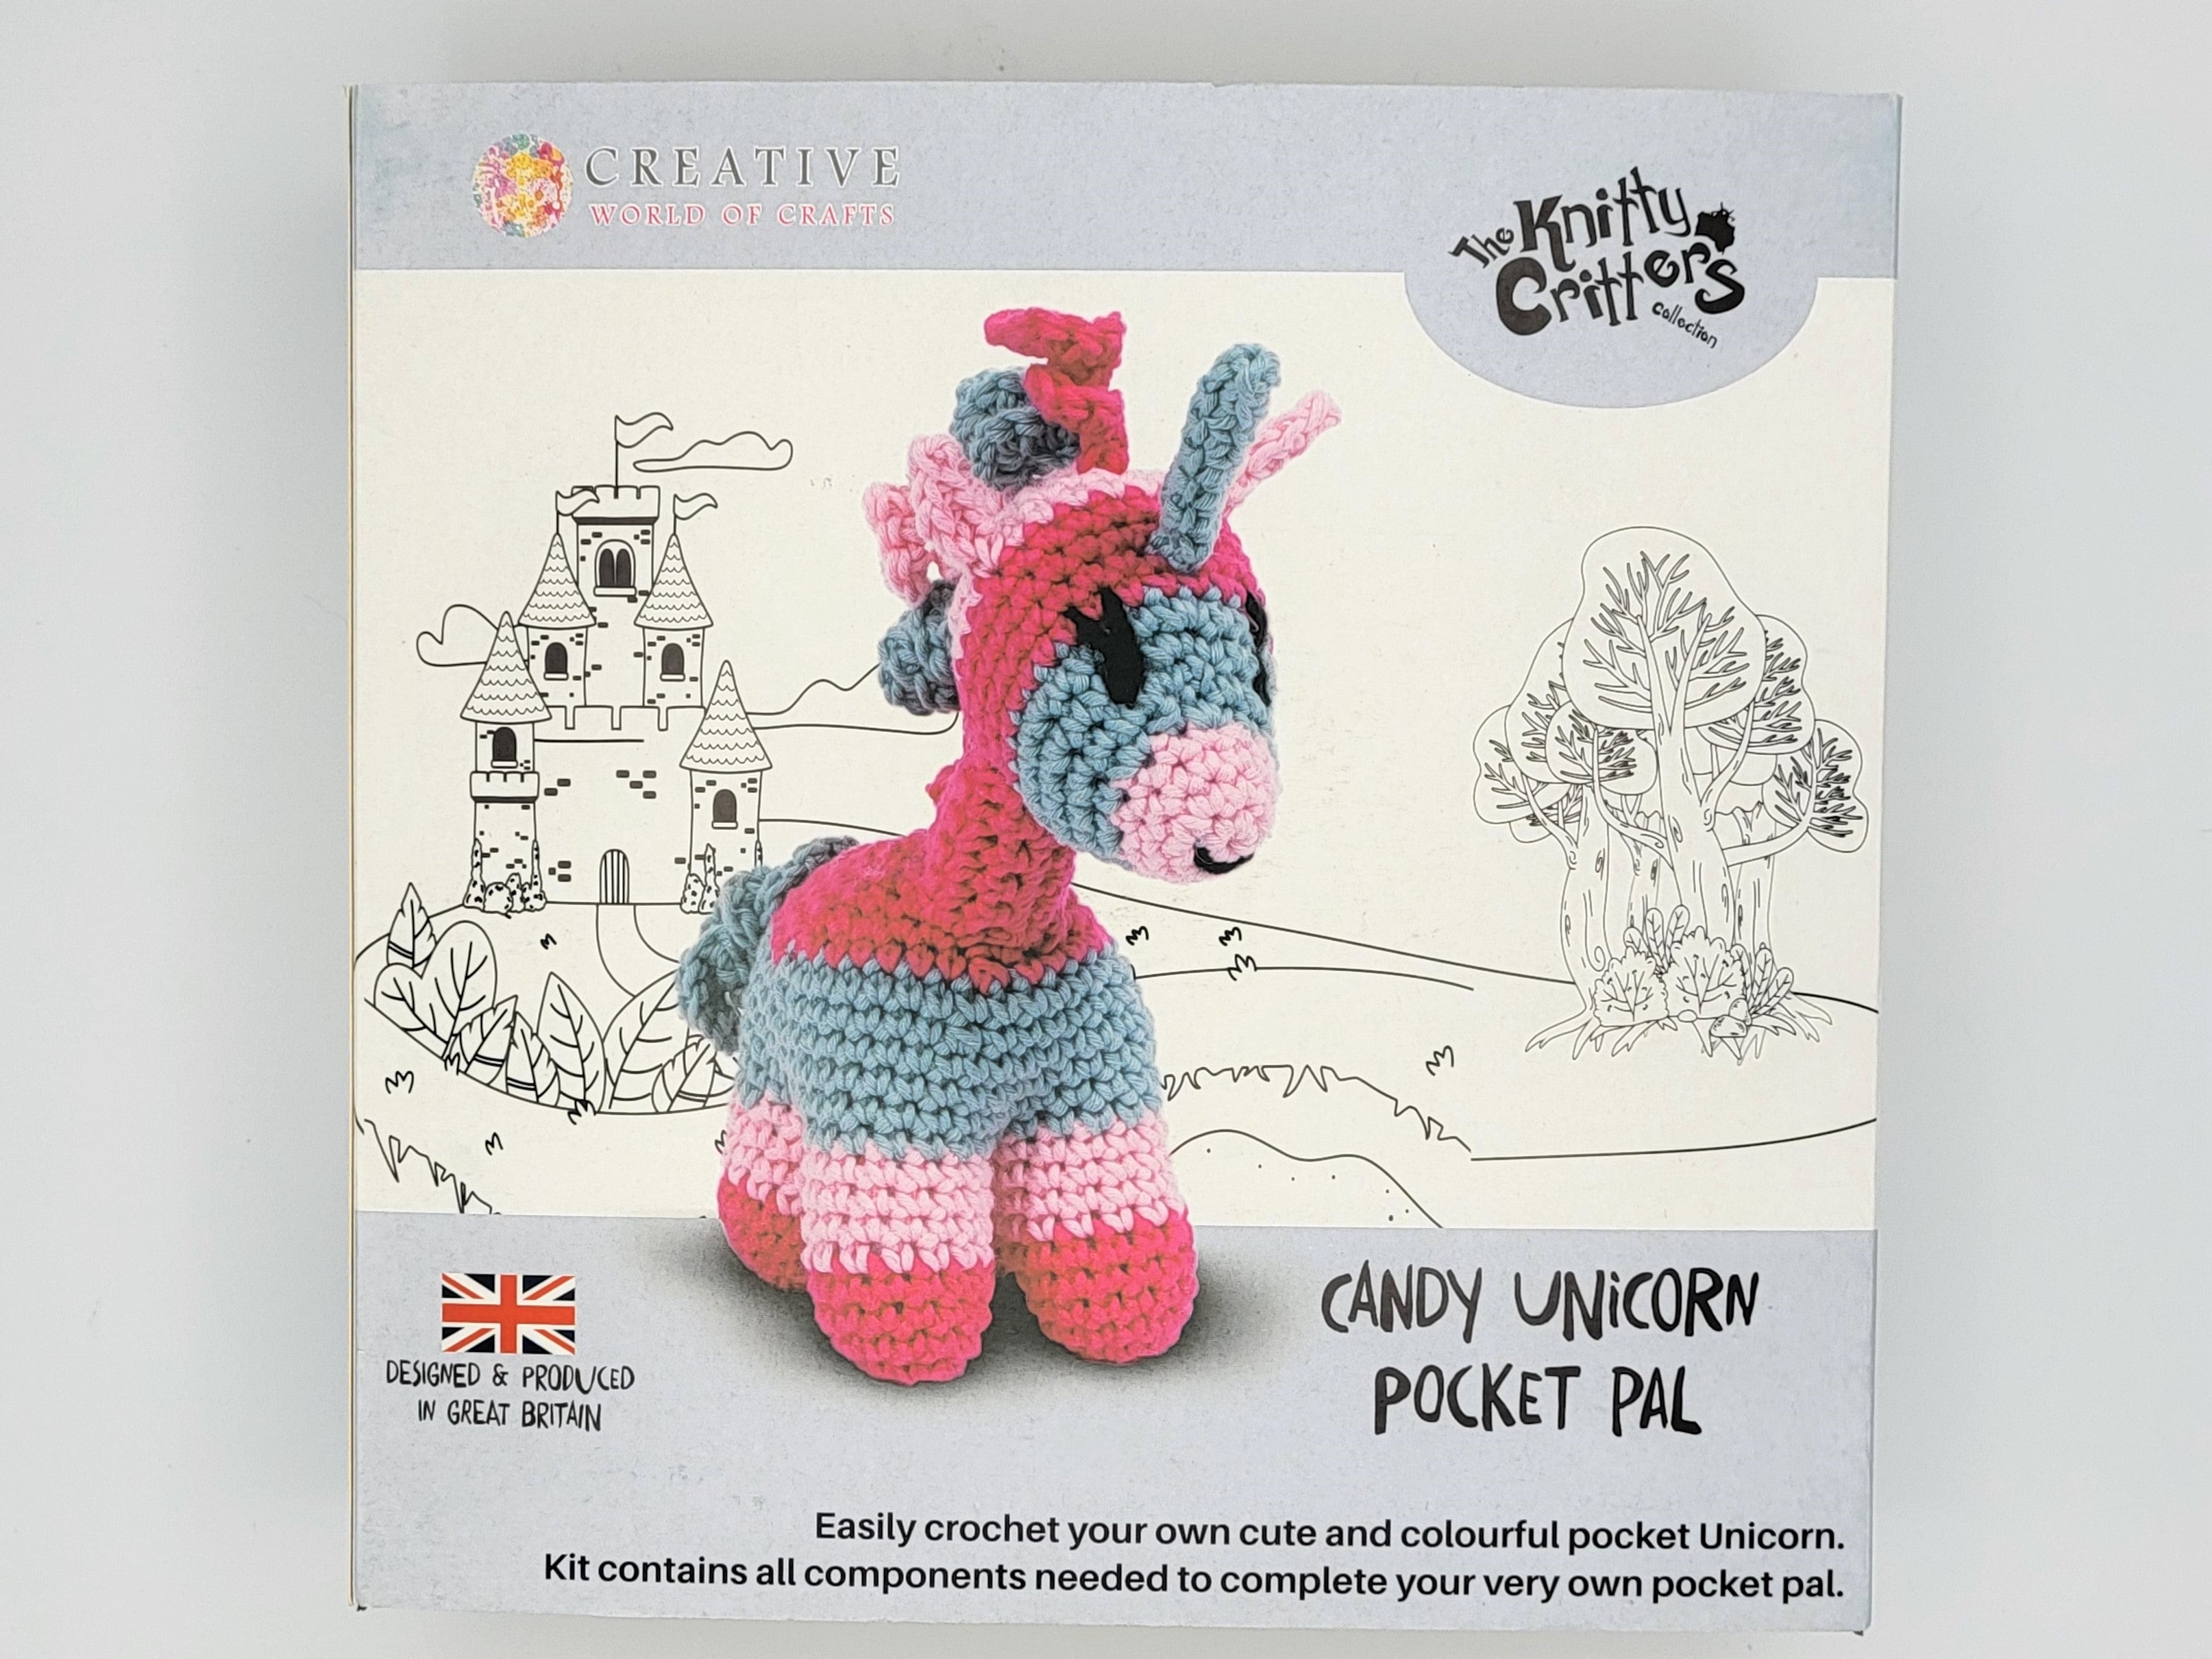 Disney Knitty Critters Crochet Kit